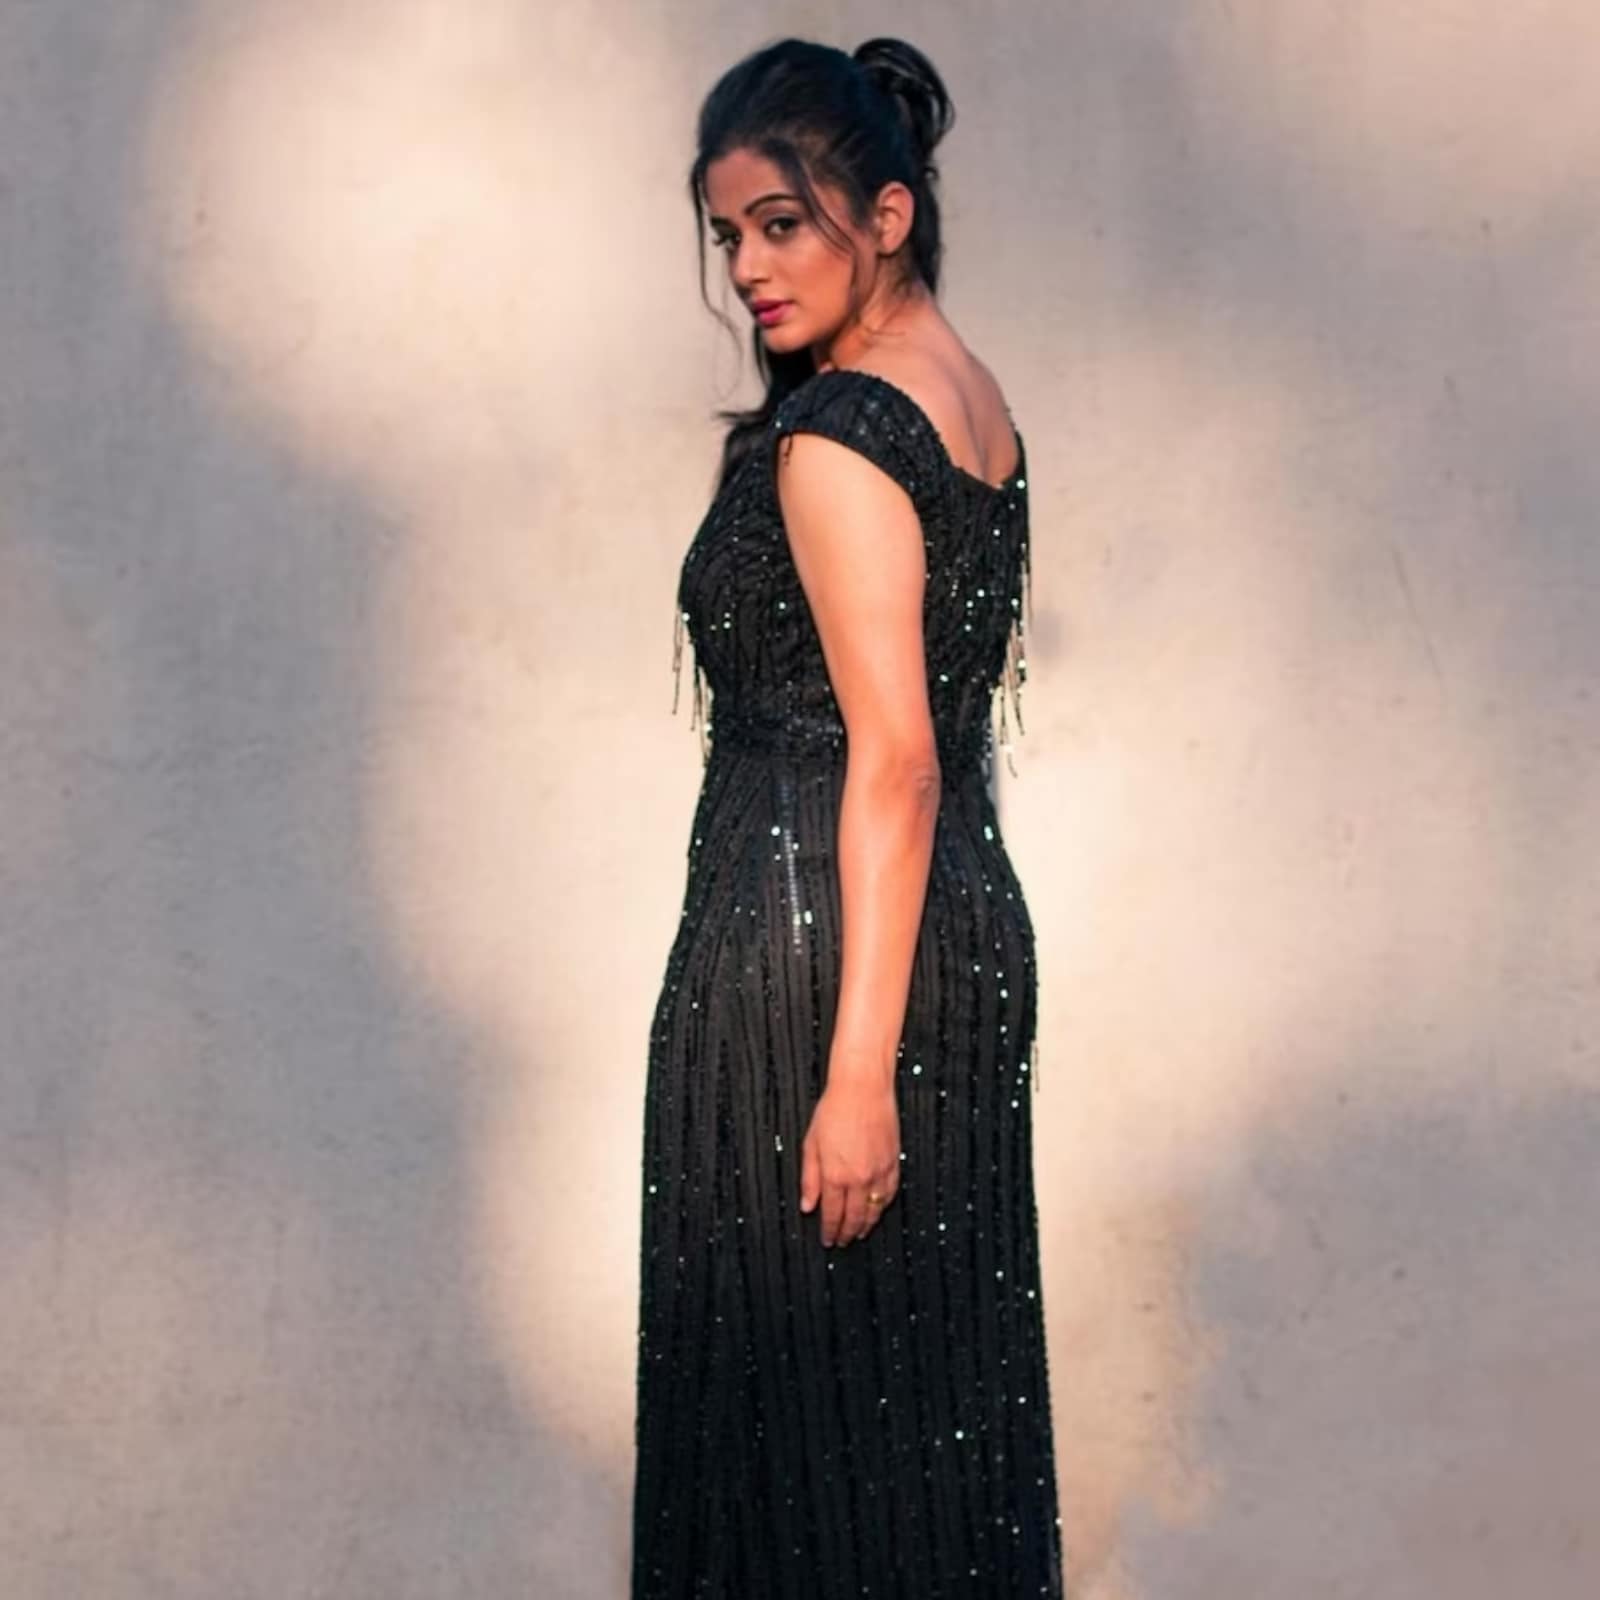 so pretty | Cute black dress, Bollywood actress, Dress